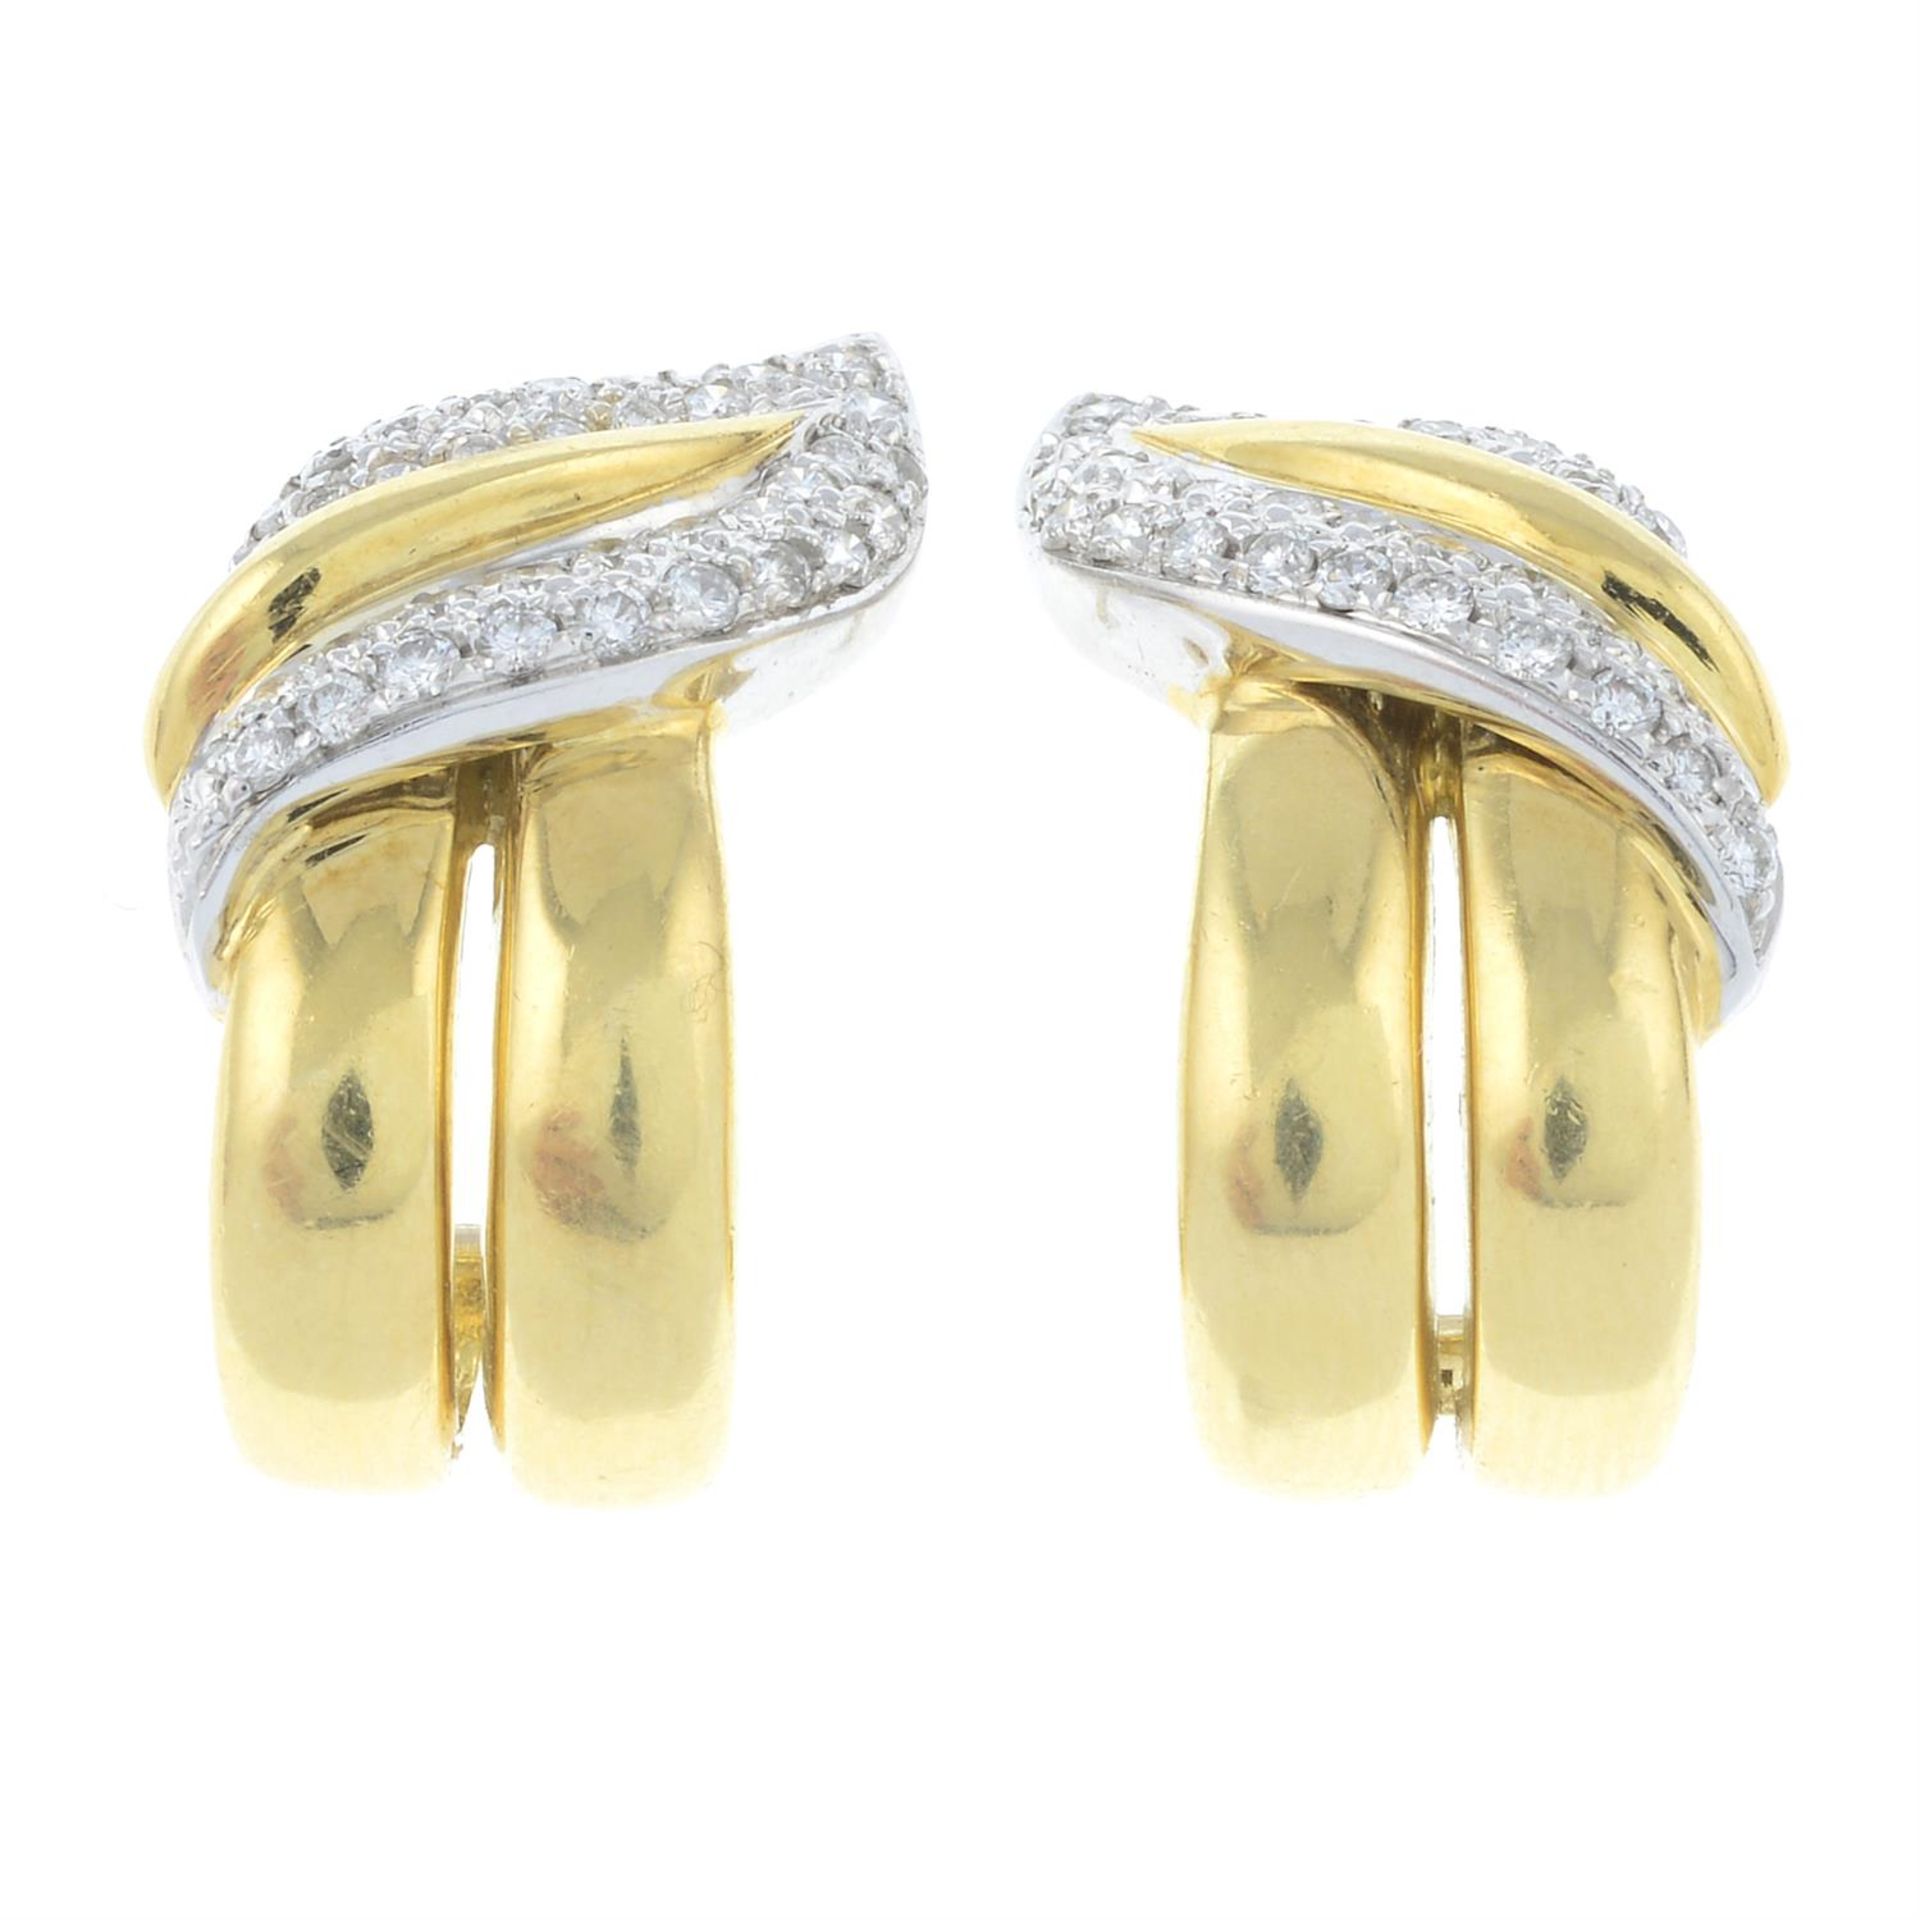 A pair of 18ct gold pavé-set diamond foliate earrings.